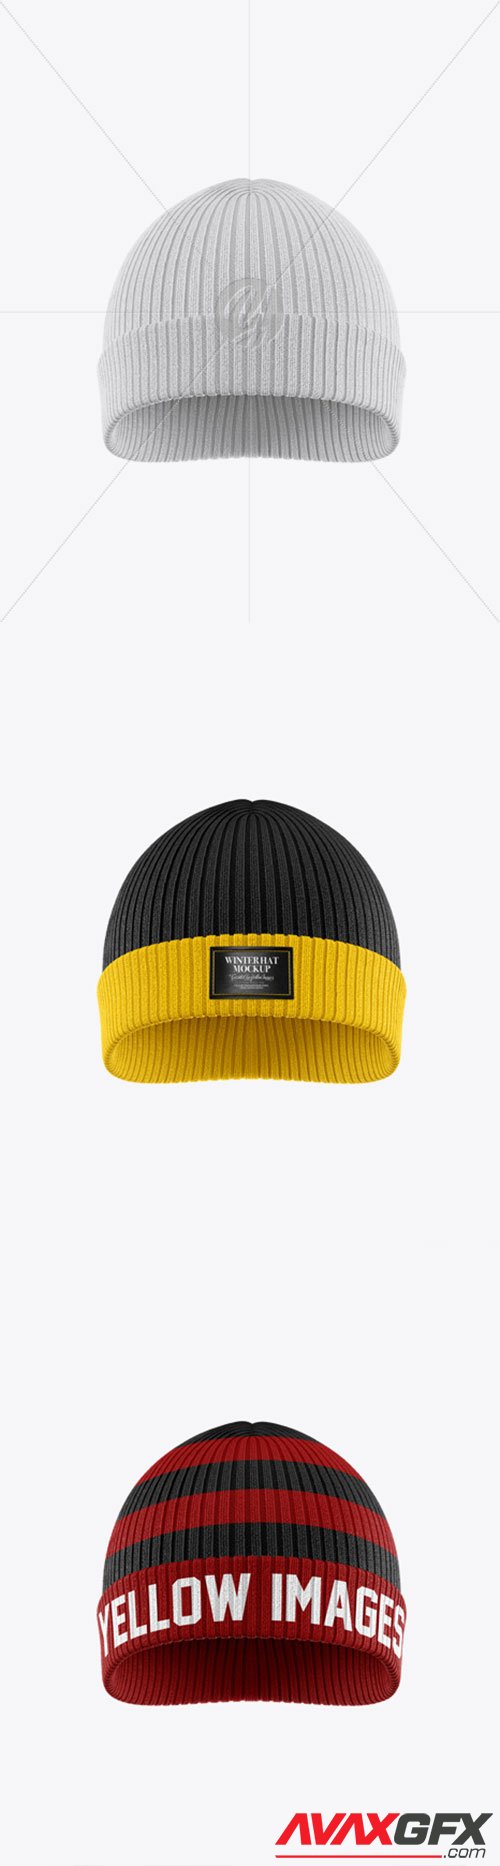 Winter Hat Mockup 32040